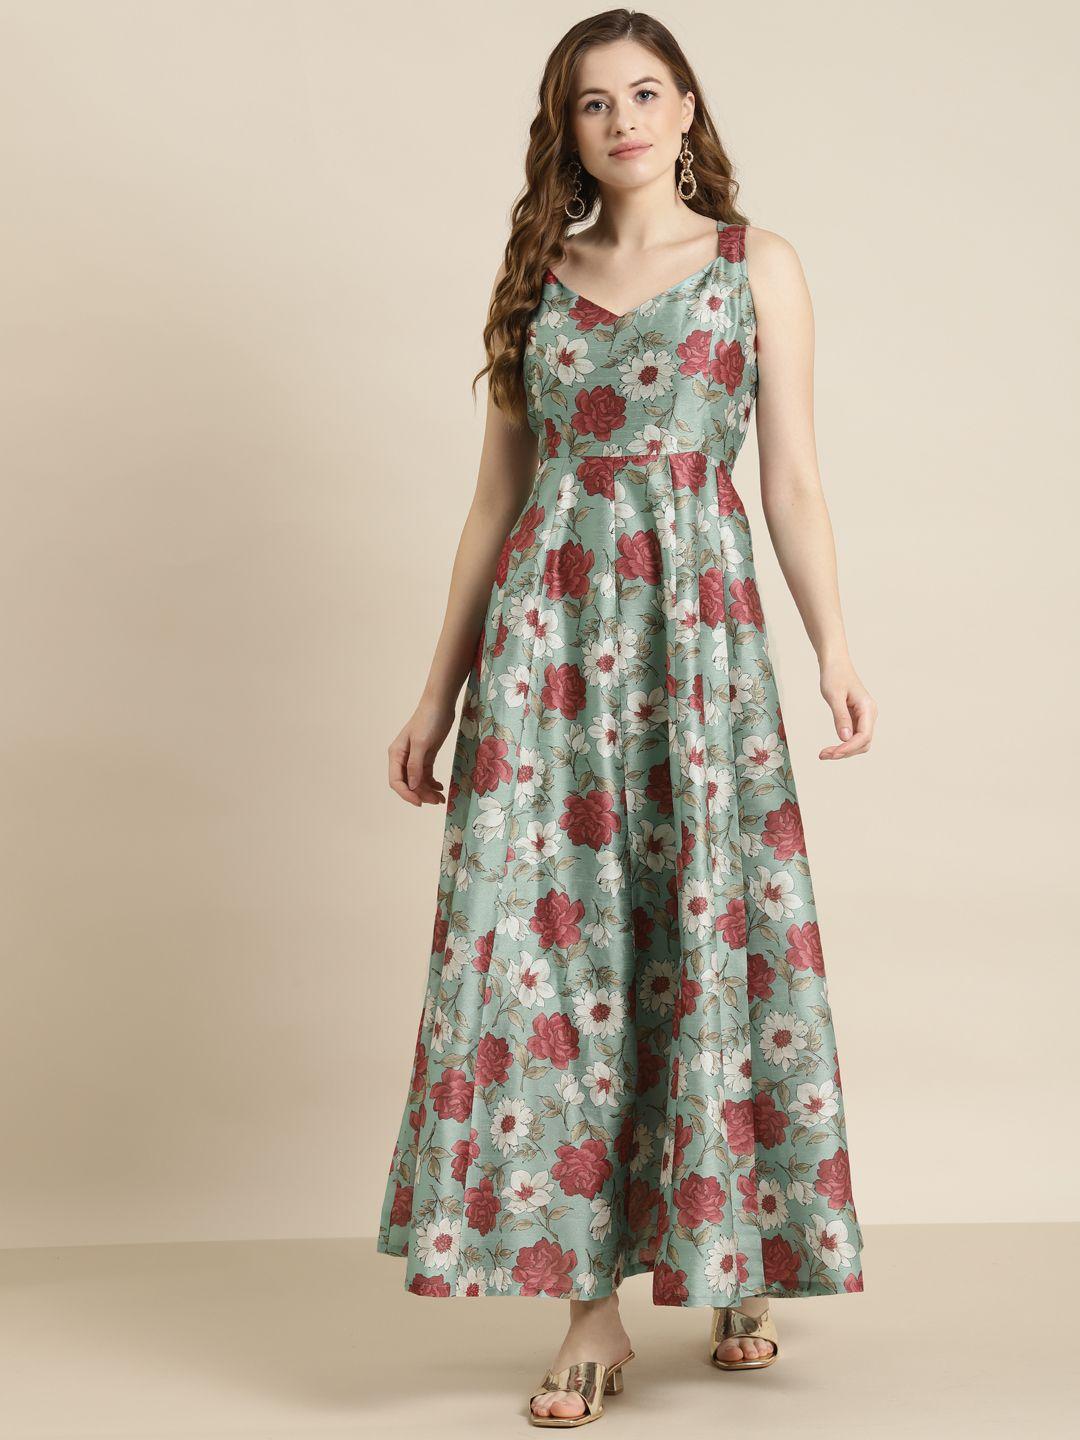 shae by sassafras sea green & maroon floral maxi dress